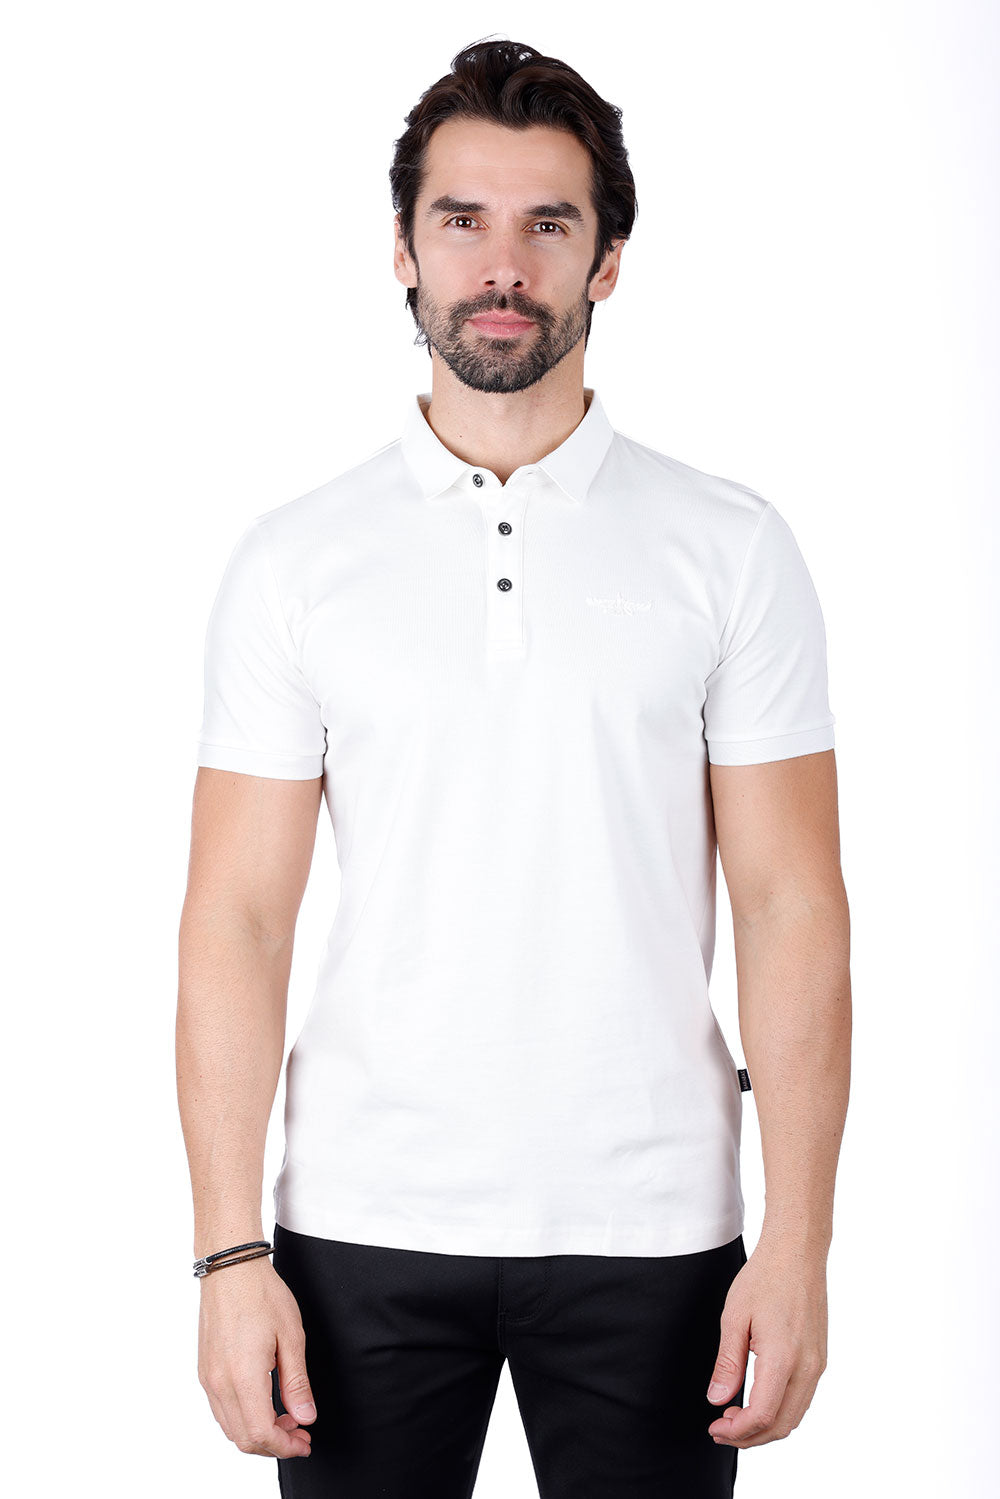 Barabas Men's Solid Color Premium Short Sleeve Logo polo Shirts 3PS128 White 